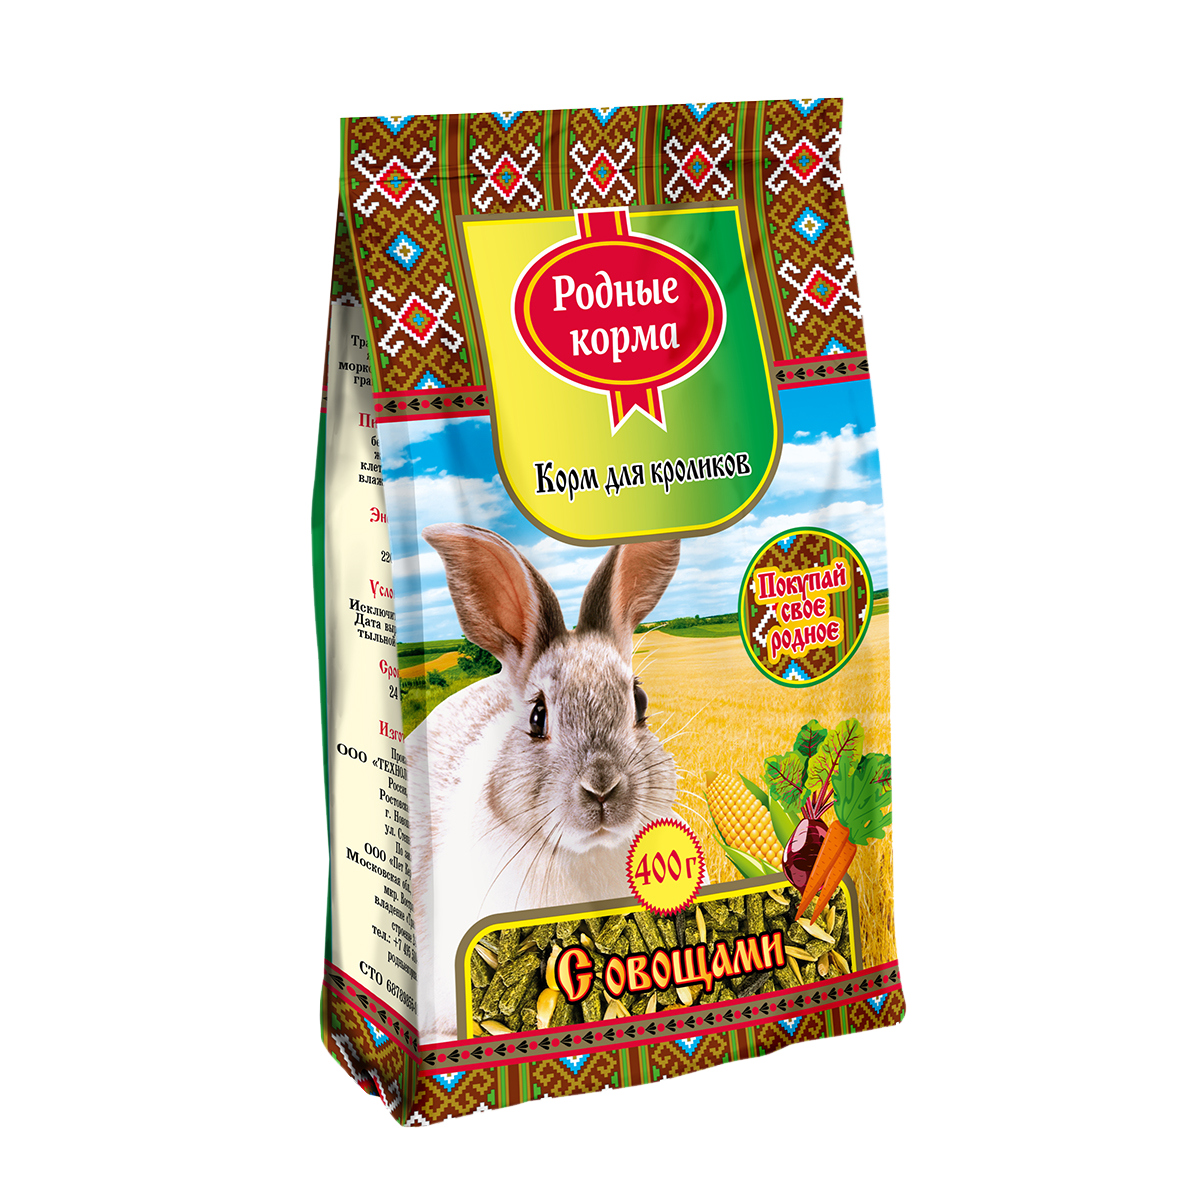 РОДНЫЕ КОРМА 400 г корм для кроликов с овощами 1х18